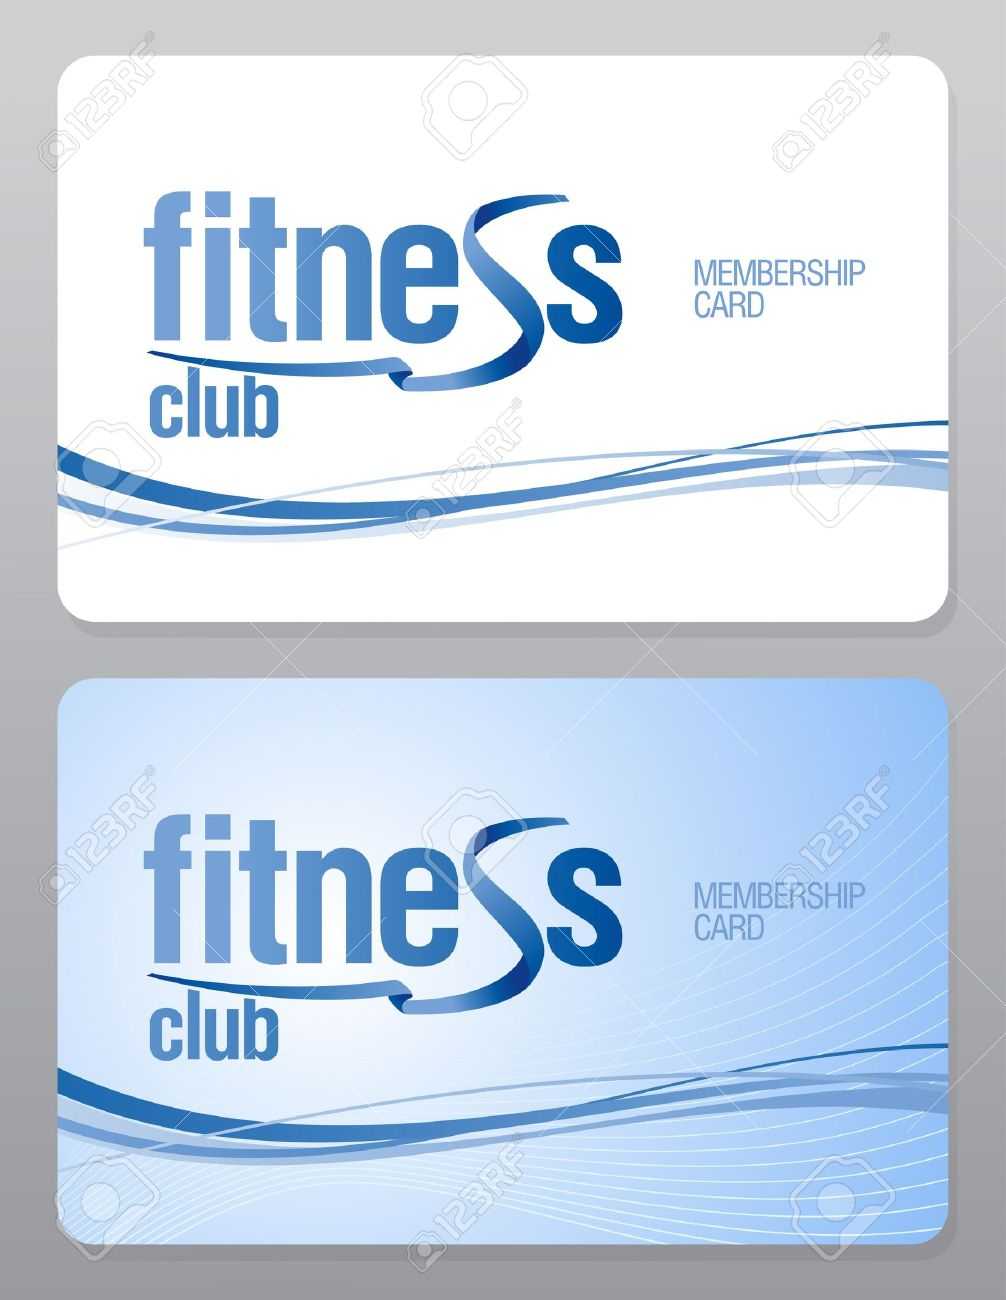 Fitness Club Membership Card Design Template. With Regard To Template For Membership Cards